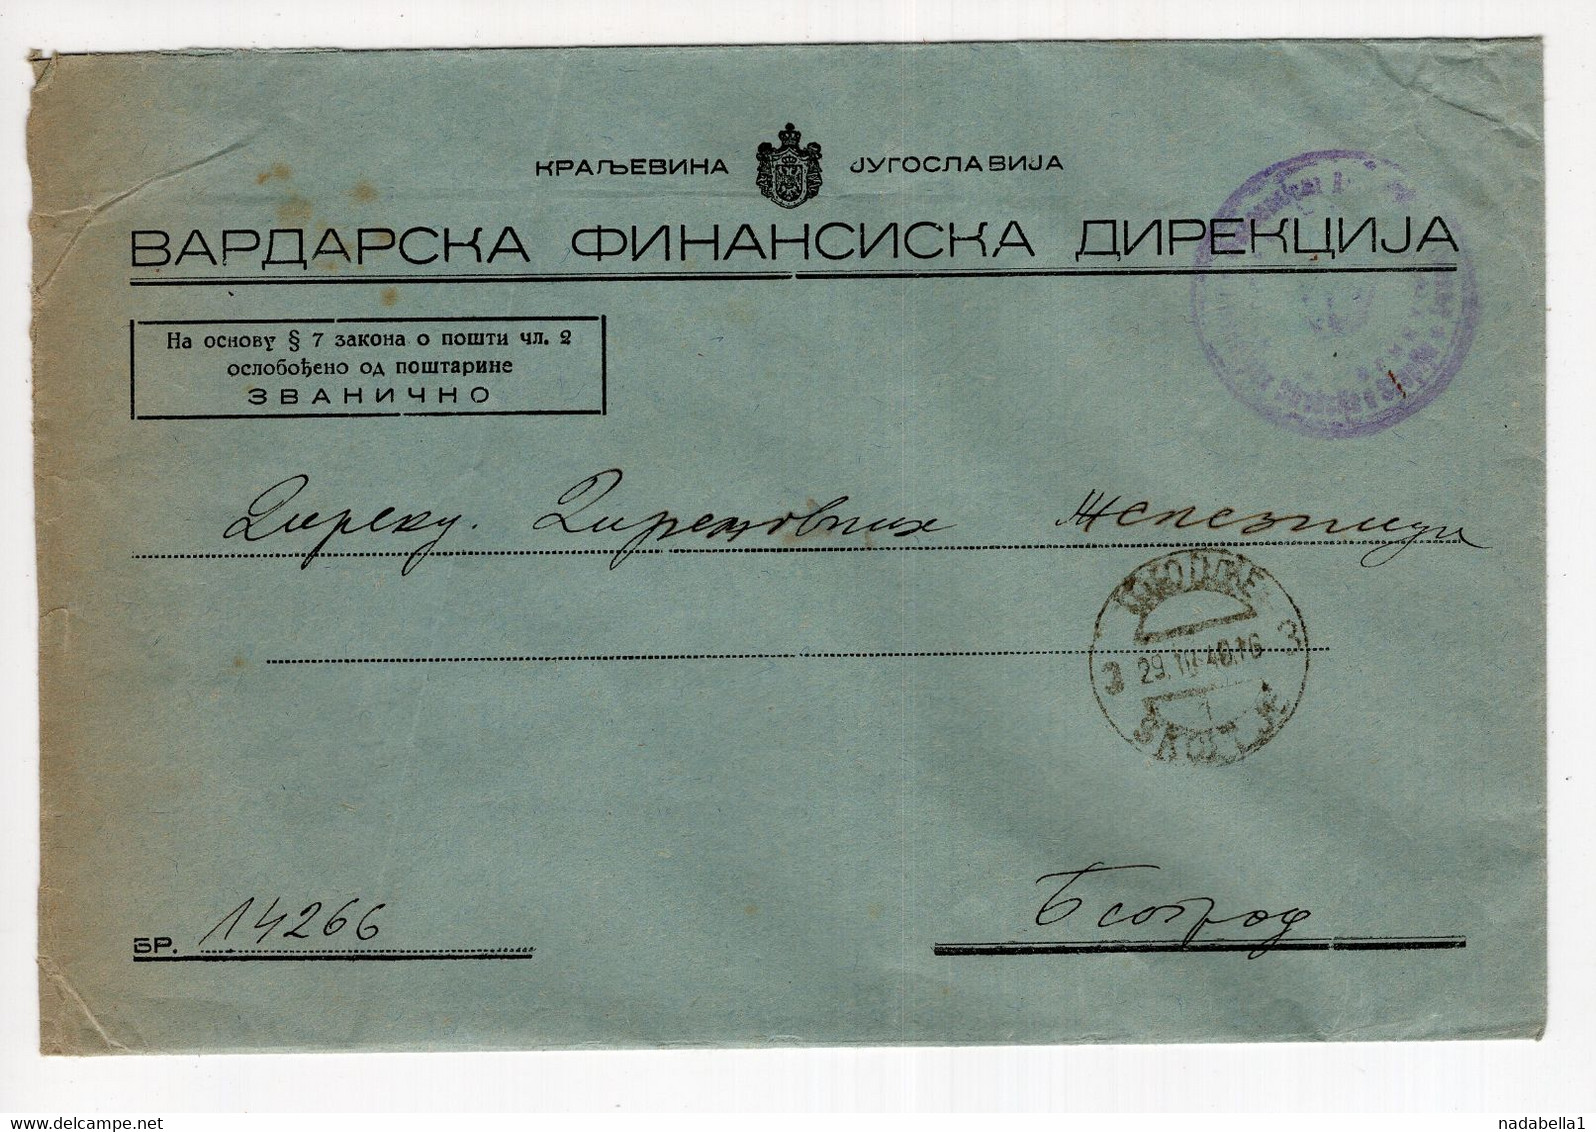 1940. KINGDOM OF YUGOSLAVIA,MACEDONIA,SKOPJE,OFFICIAL COVER,NO STAMP,VARDAR FINANCIAL OFFICE - Servizio